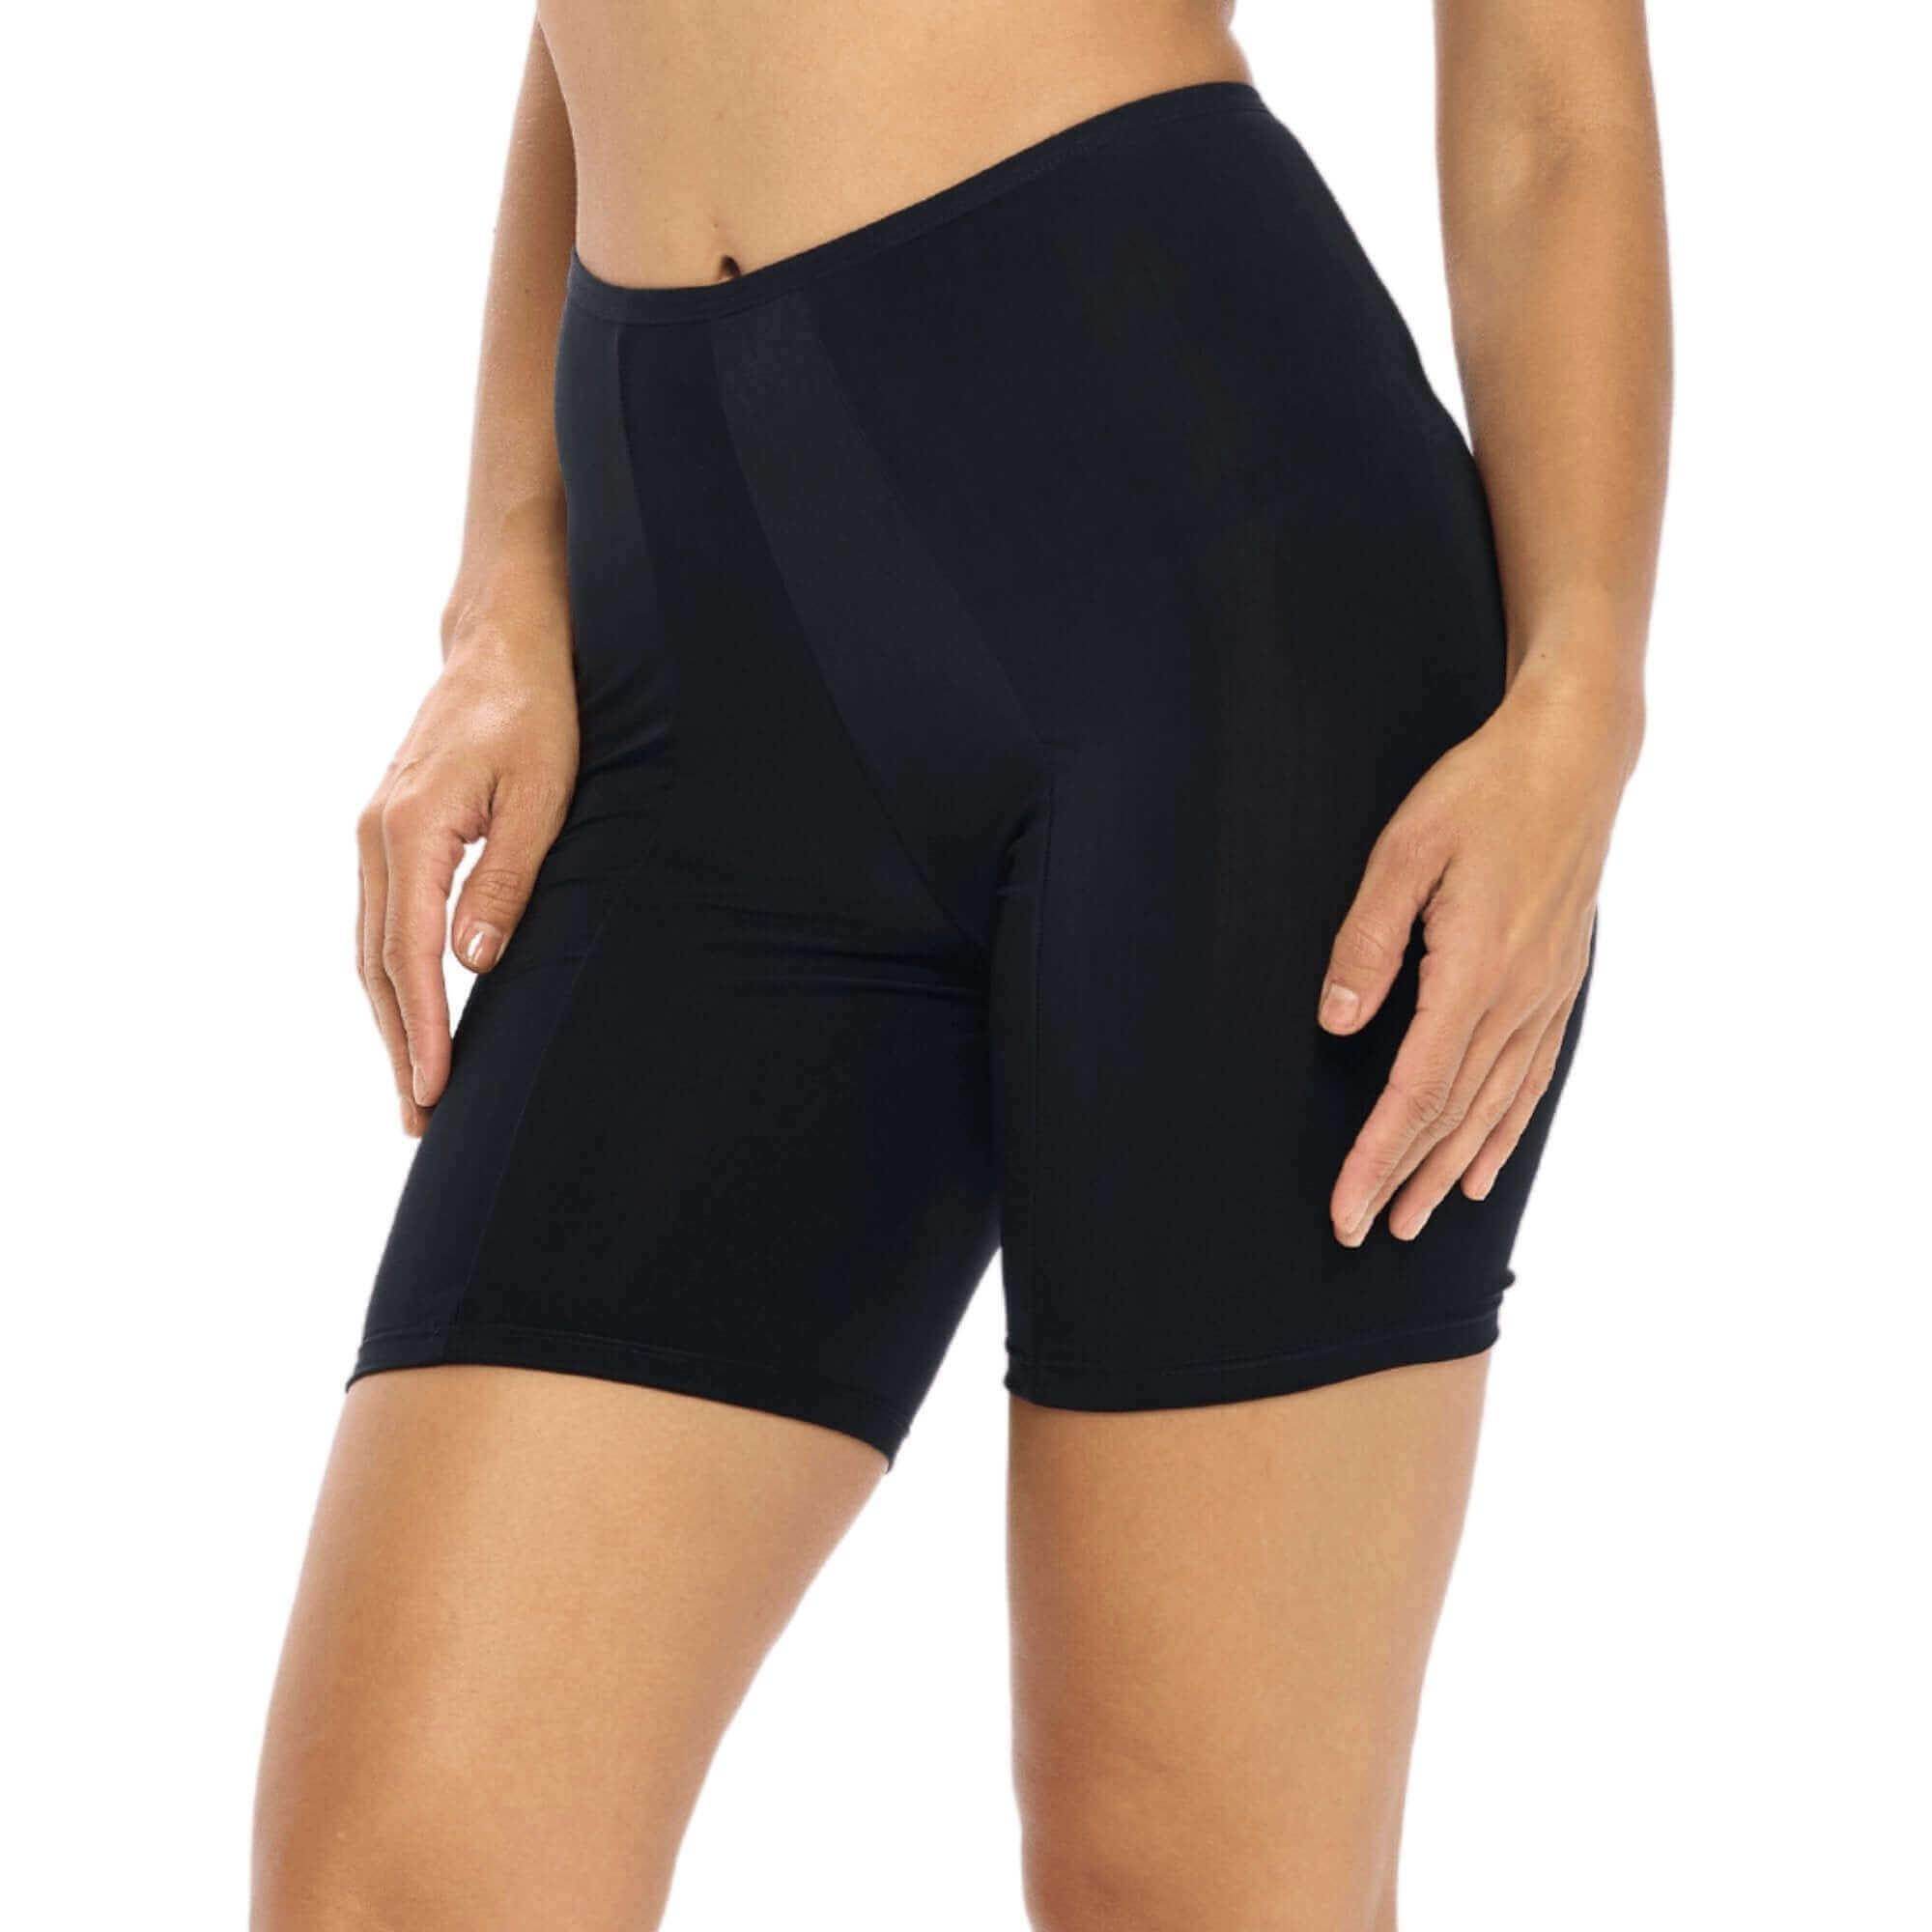 Undersummers Classic Shortlette™ slip shorts are rash guard panty